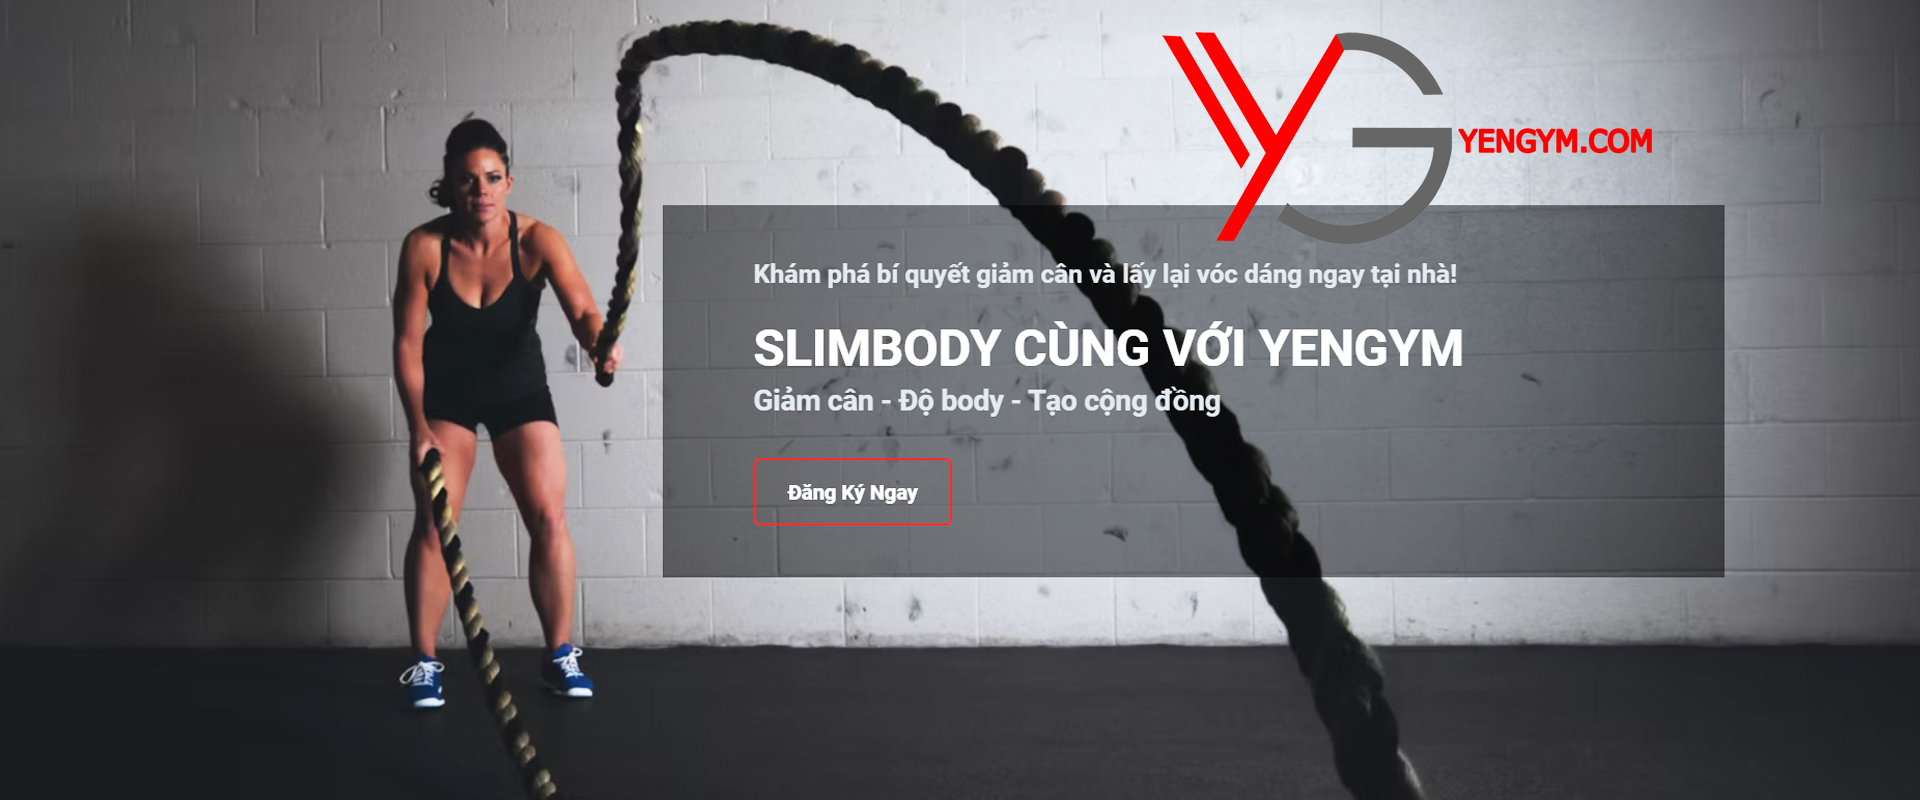 Yến Gym - Slimbody Cùng Yến Gym